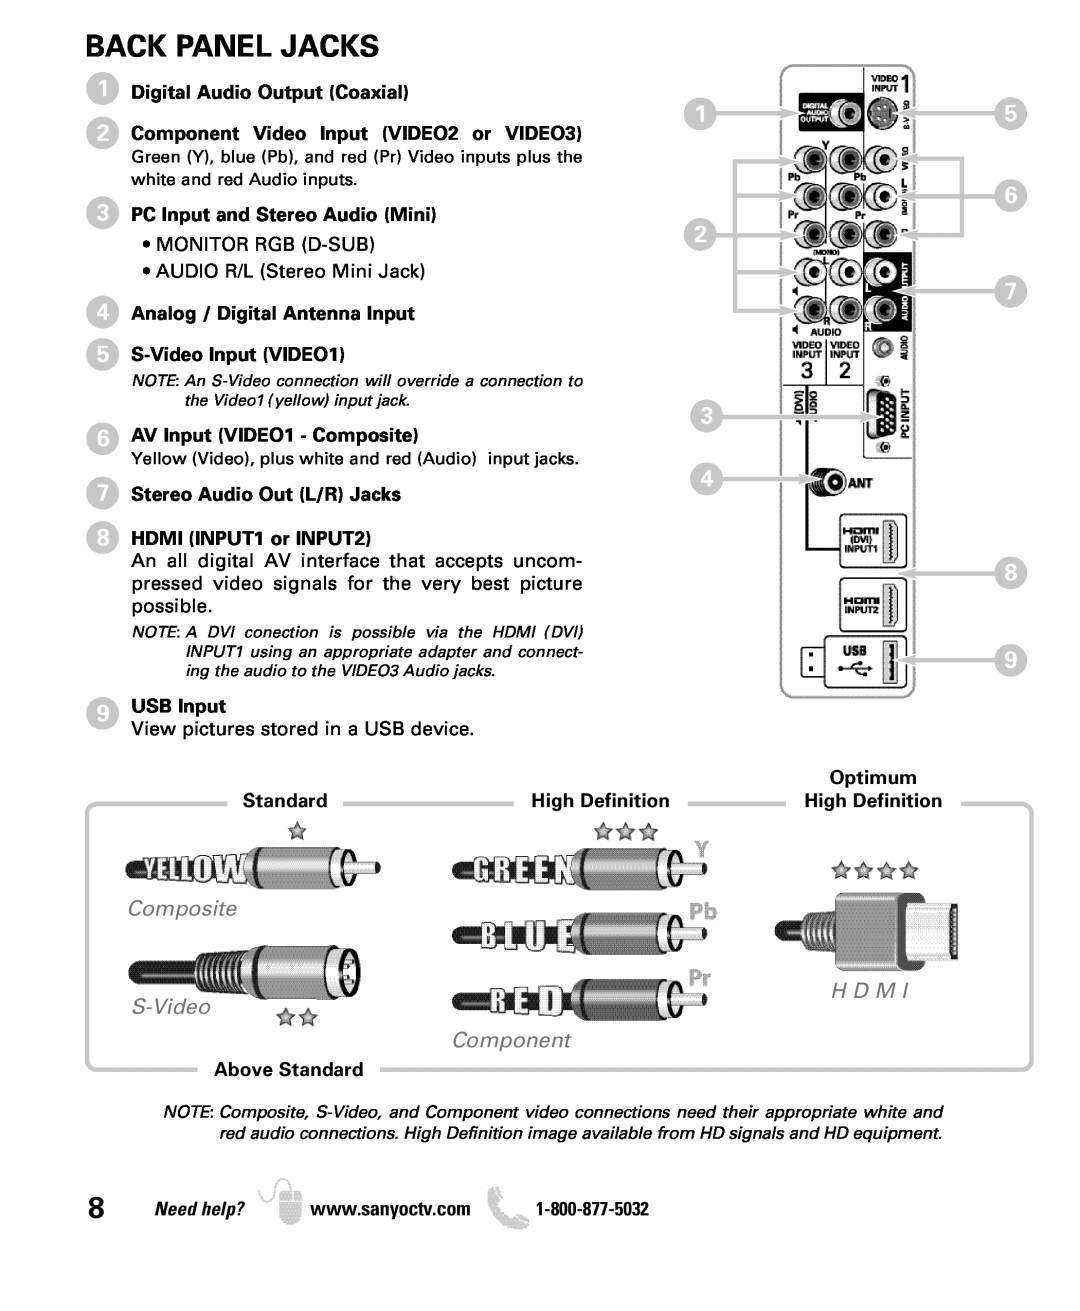 Sanyo DP26649 Back Panel Jacks, Composite H D M S-Video Component, Digital Audio Output Coaxial, USB Input, Standard 